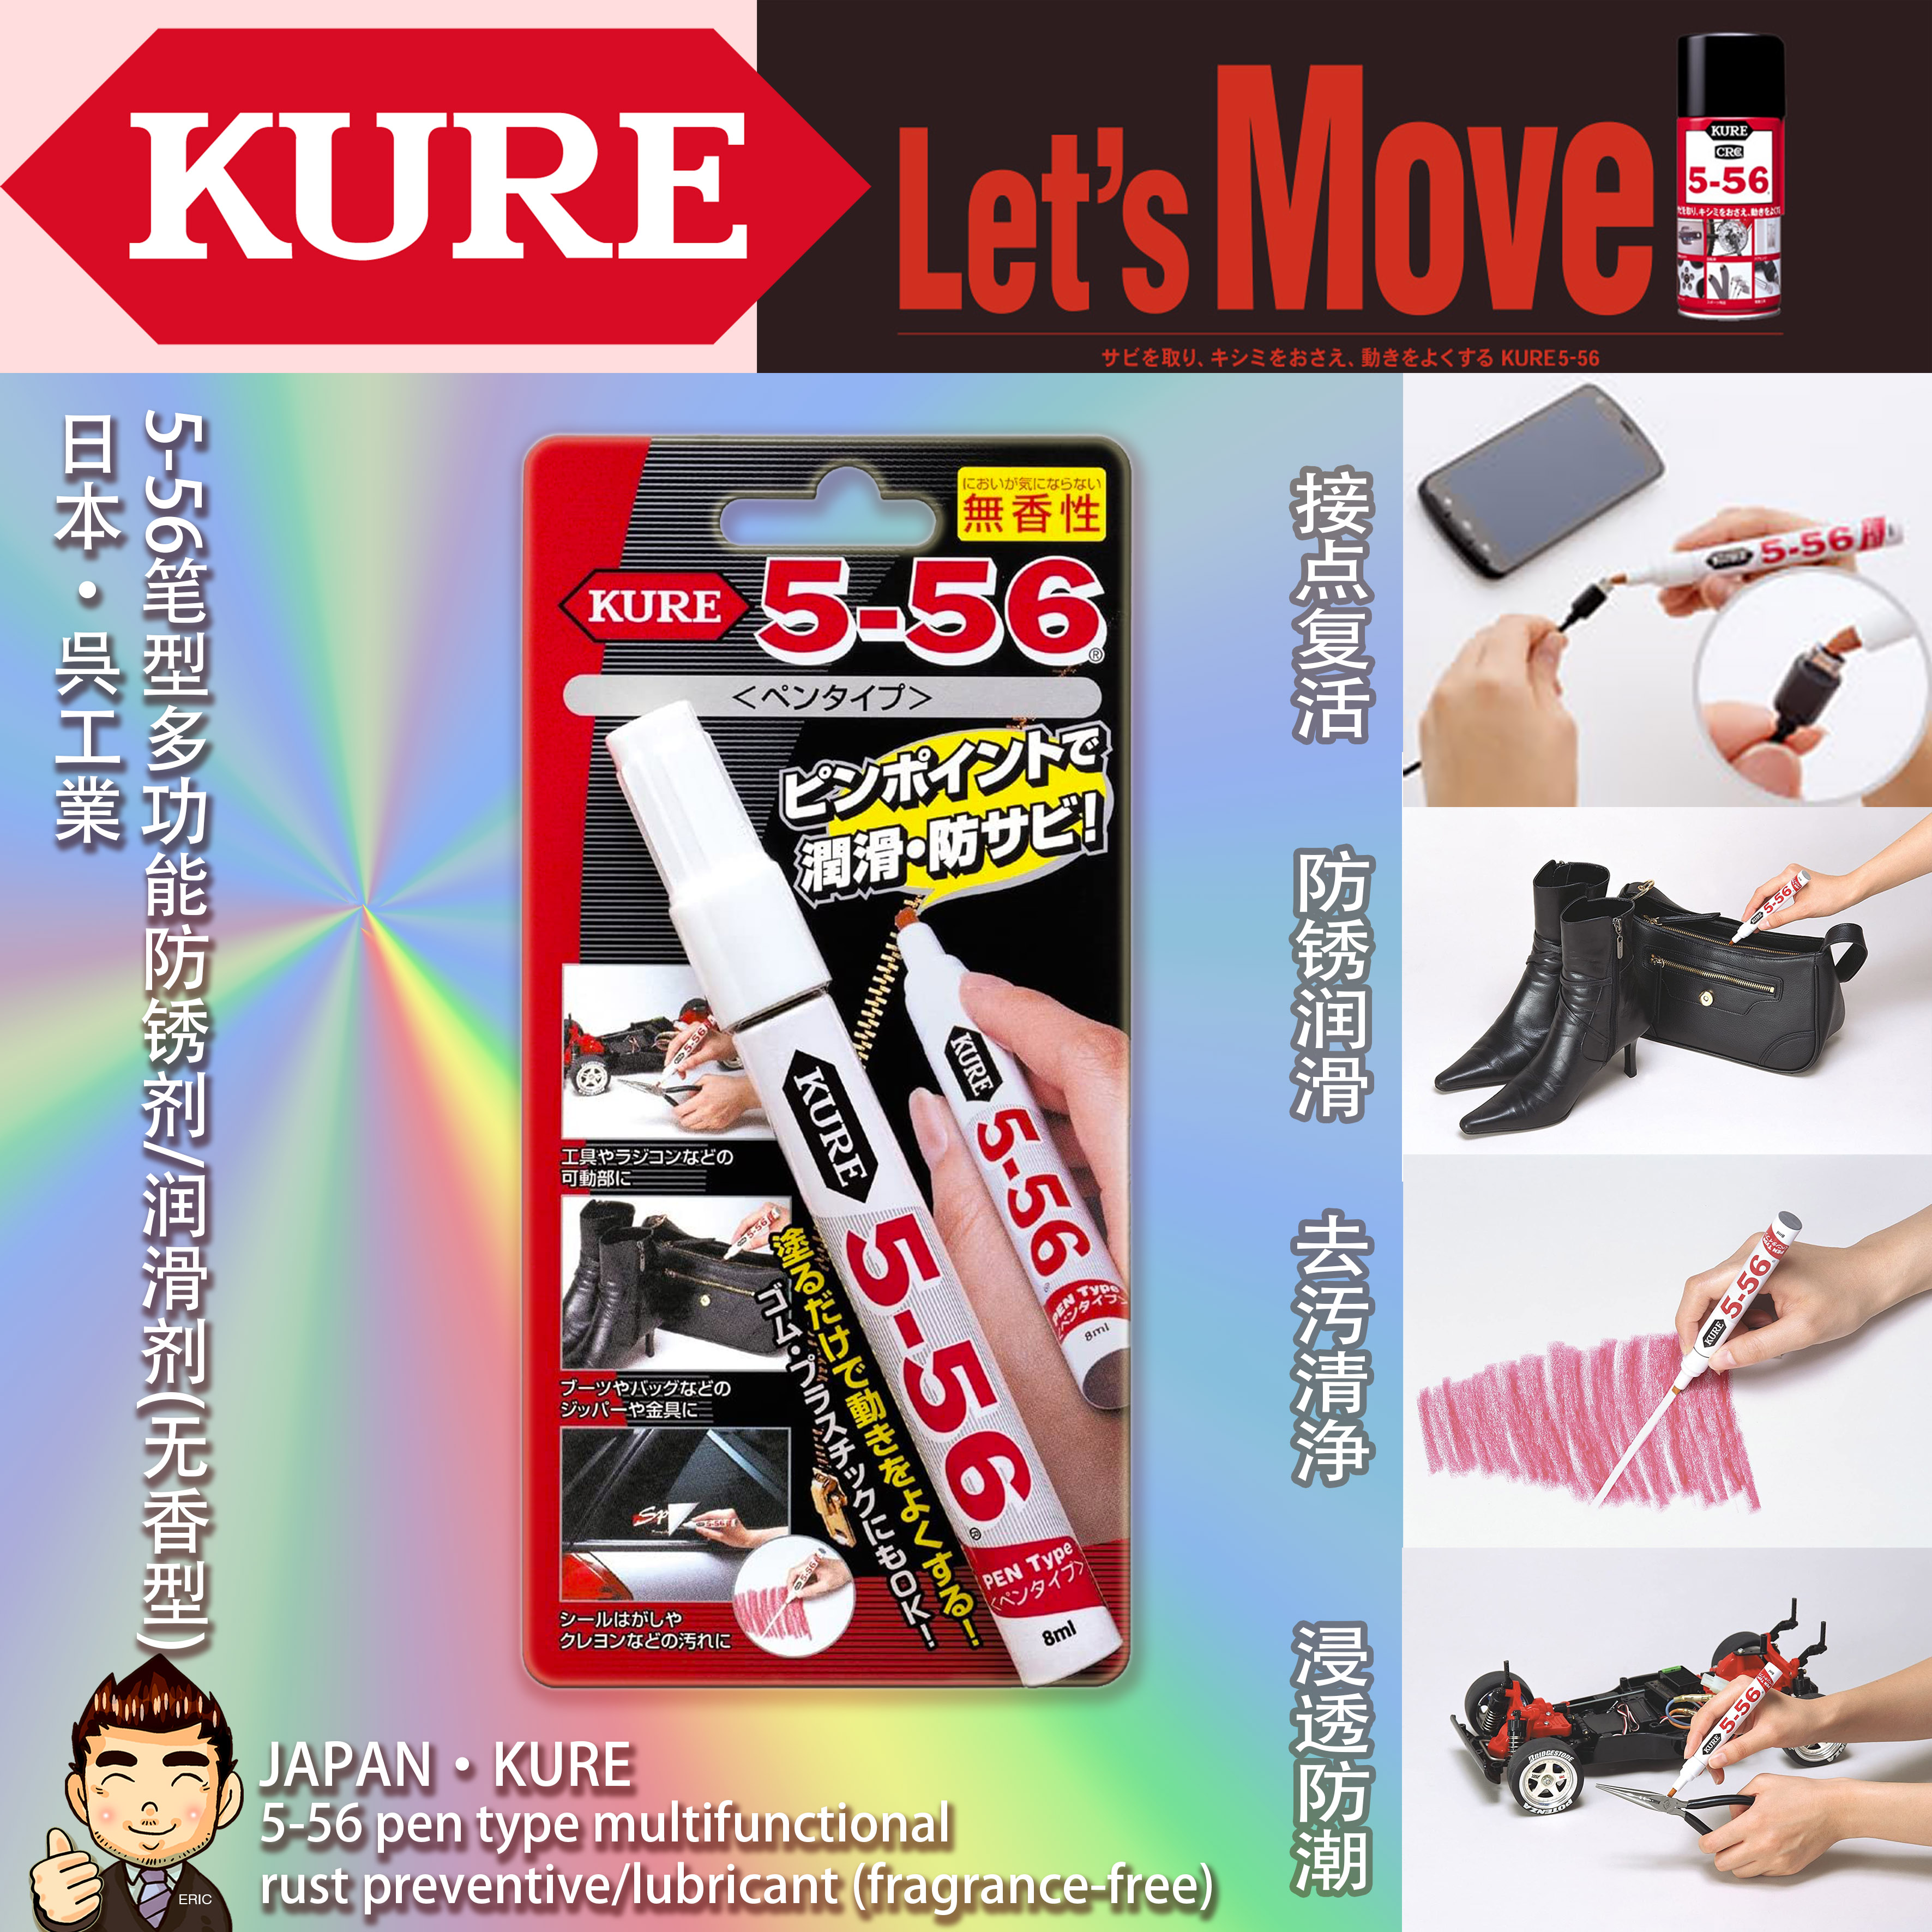 Kure - Best Price in Singapore | Lazada.sg